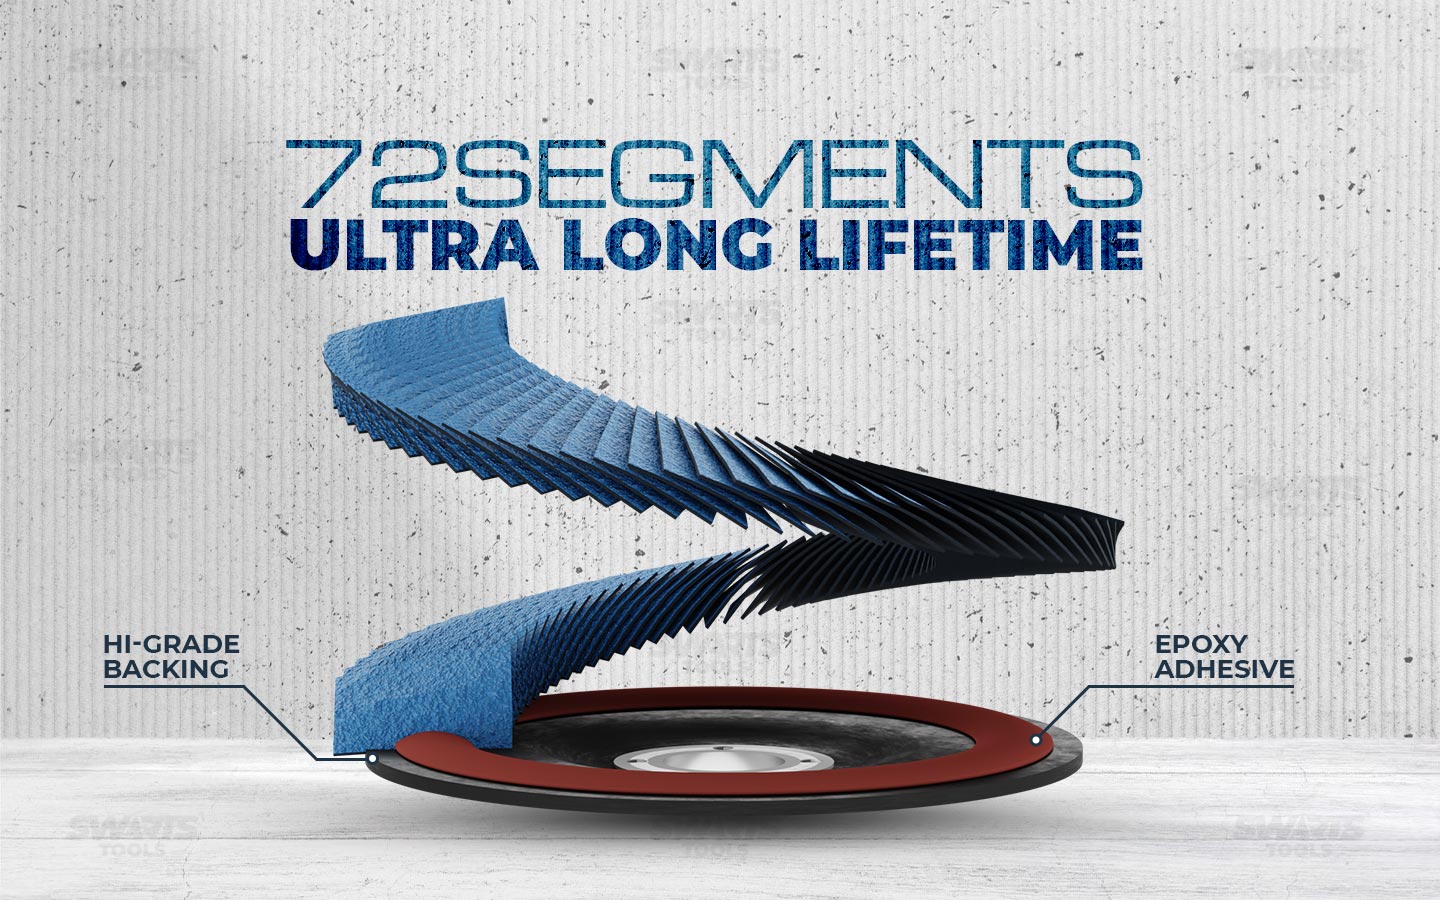 72 segments ultra long lifetime